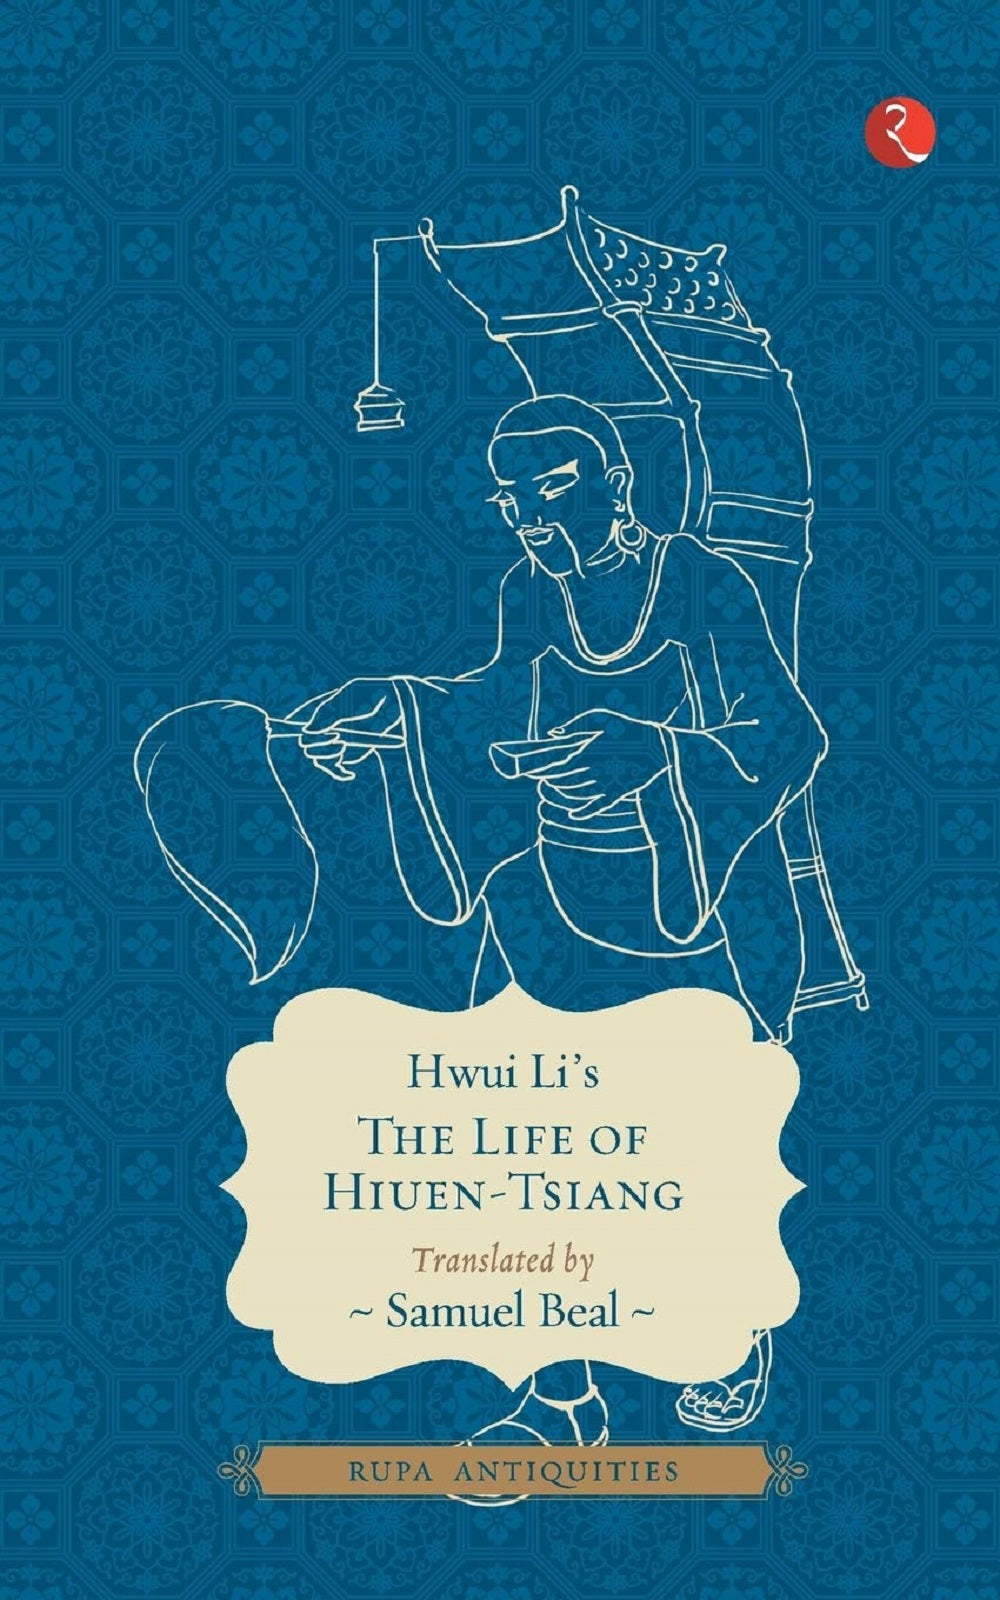 THE LIFE OF HIUEN - TSIANG